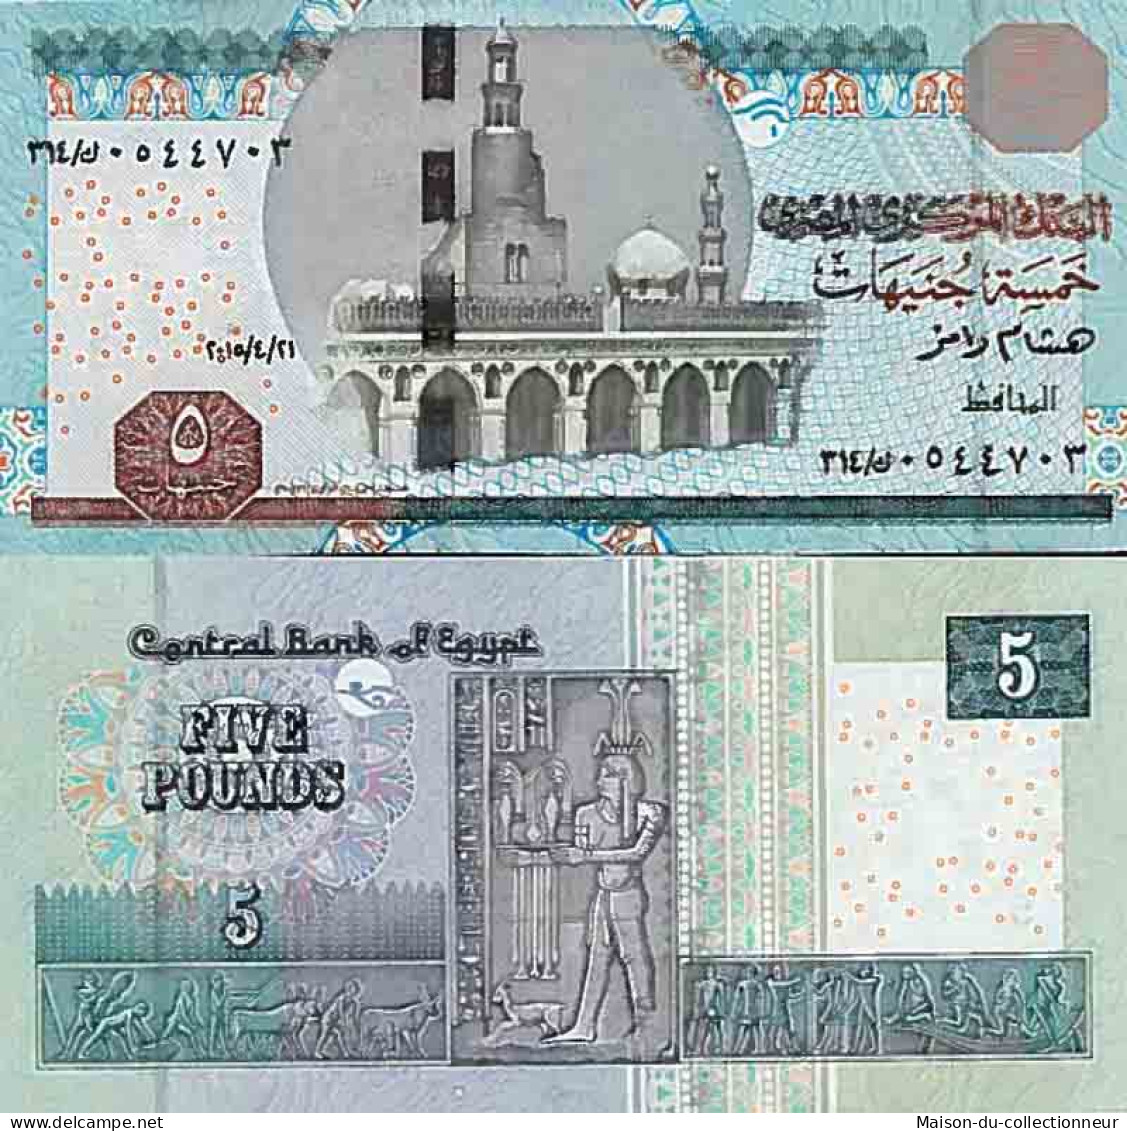 Billet De Banque Collection Egypte - PK N° 70 - 5 Piastres - Egypt